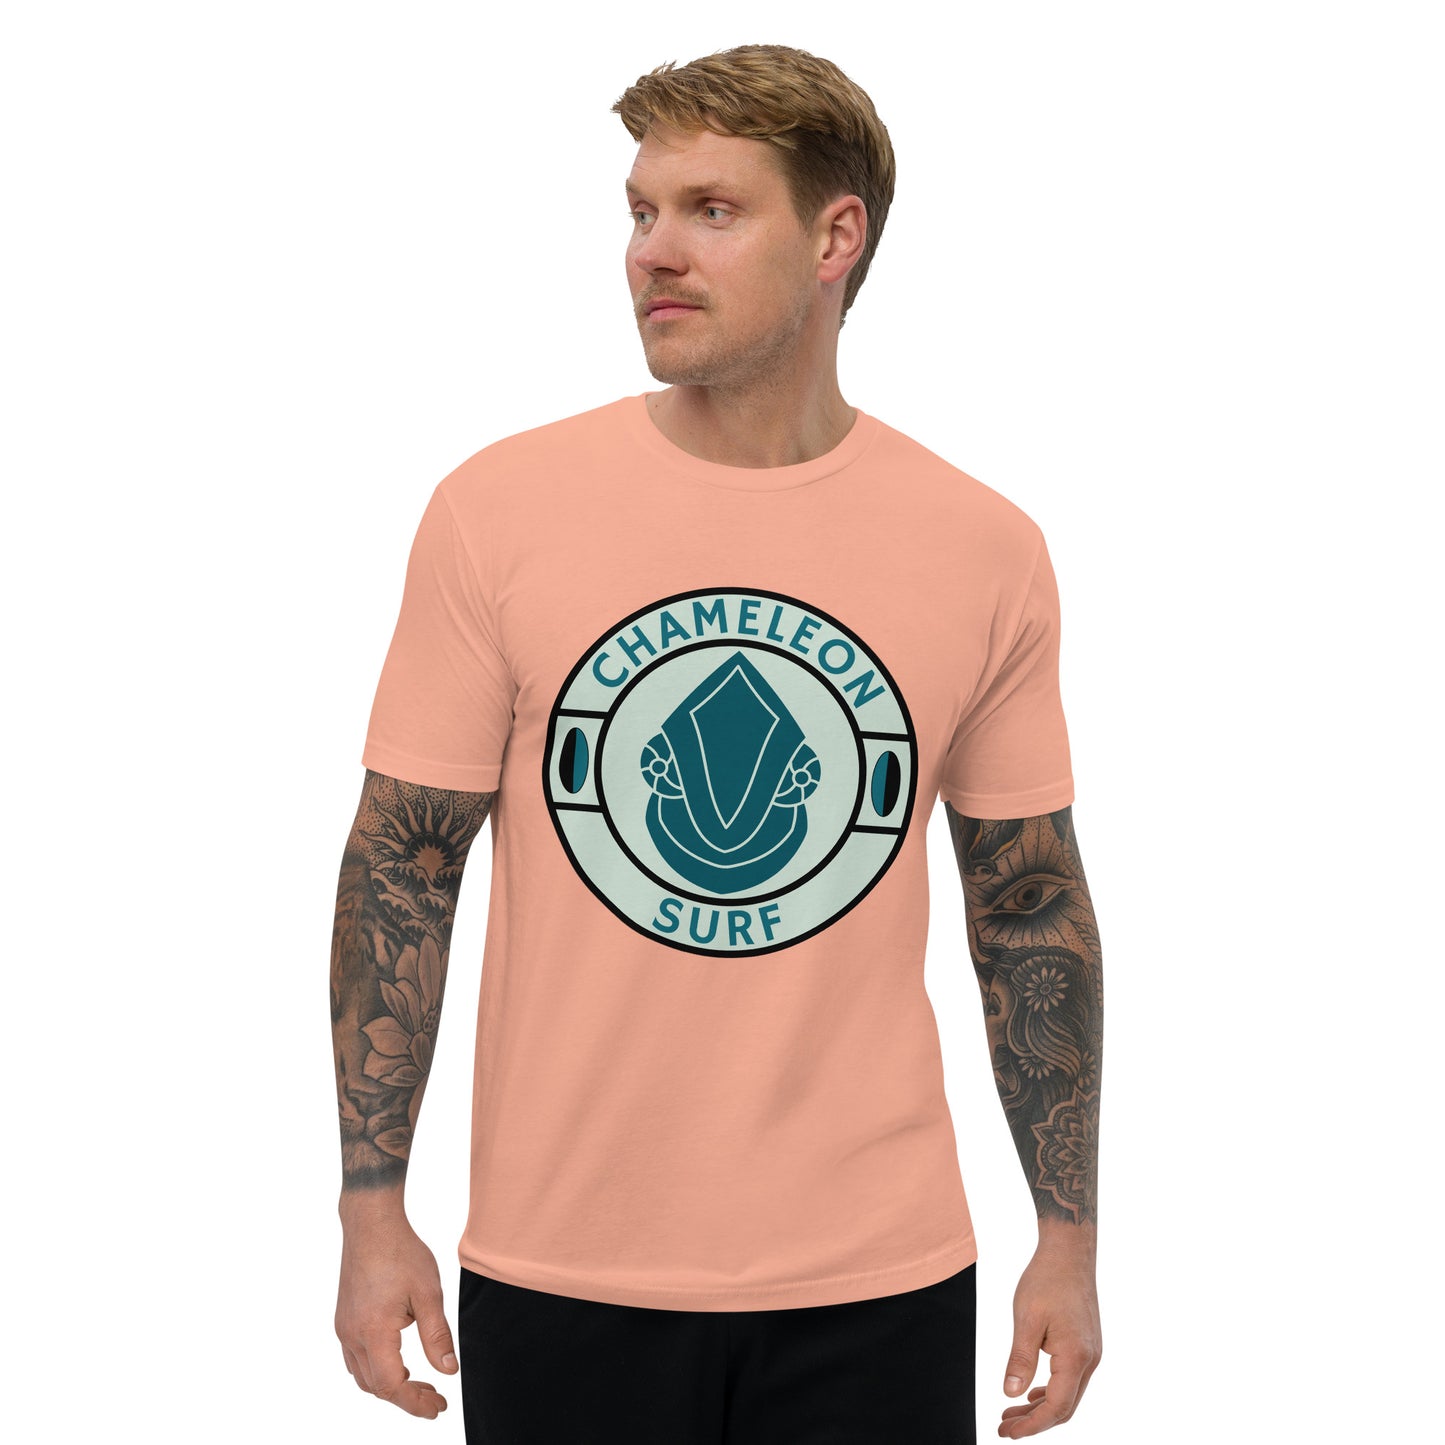 Face Off Chameleon Surf Men's T-shirt